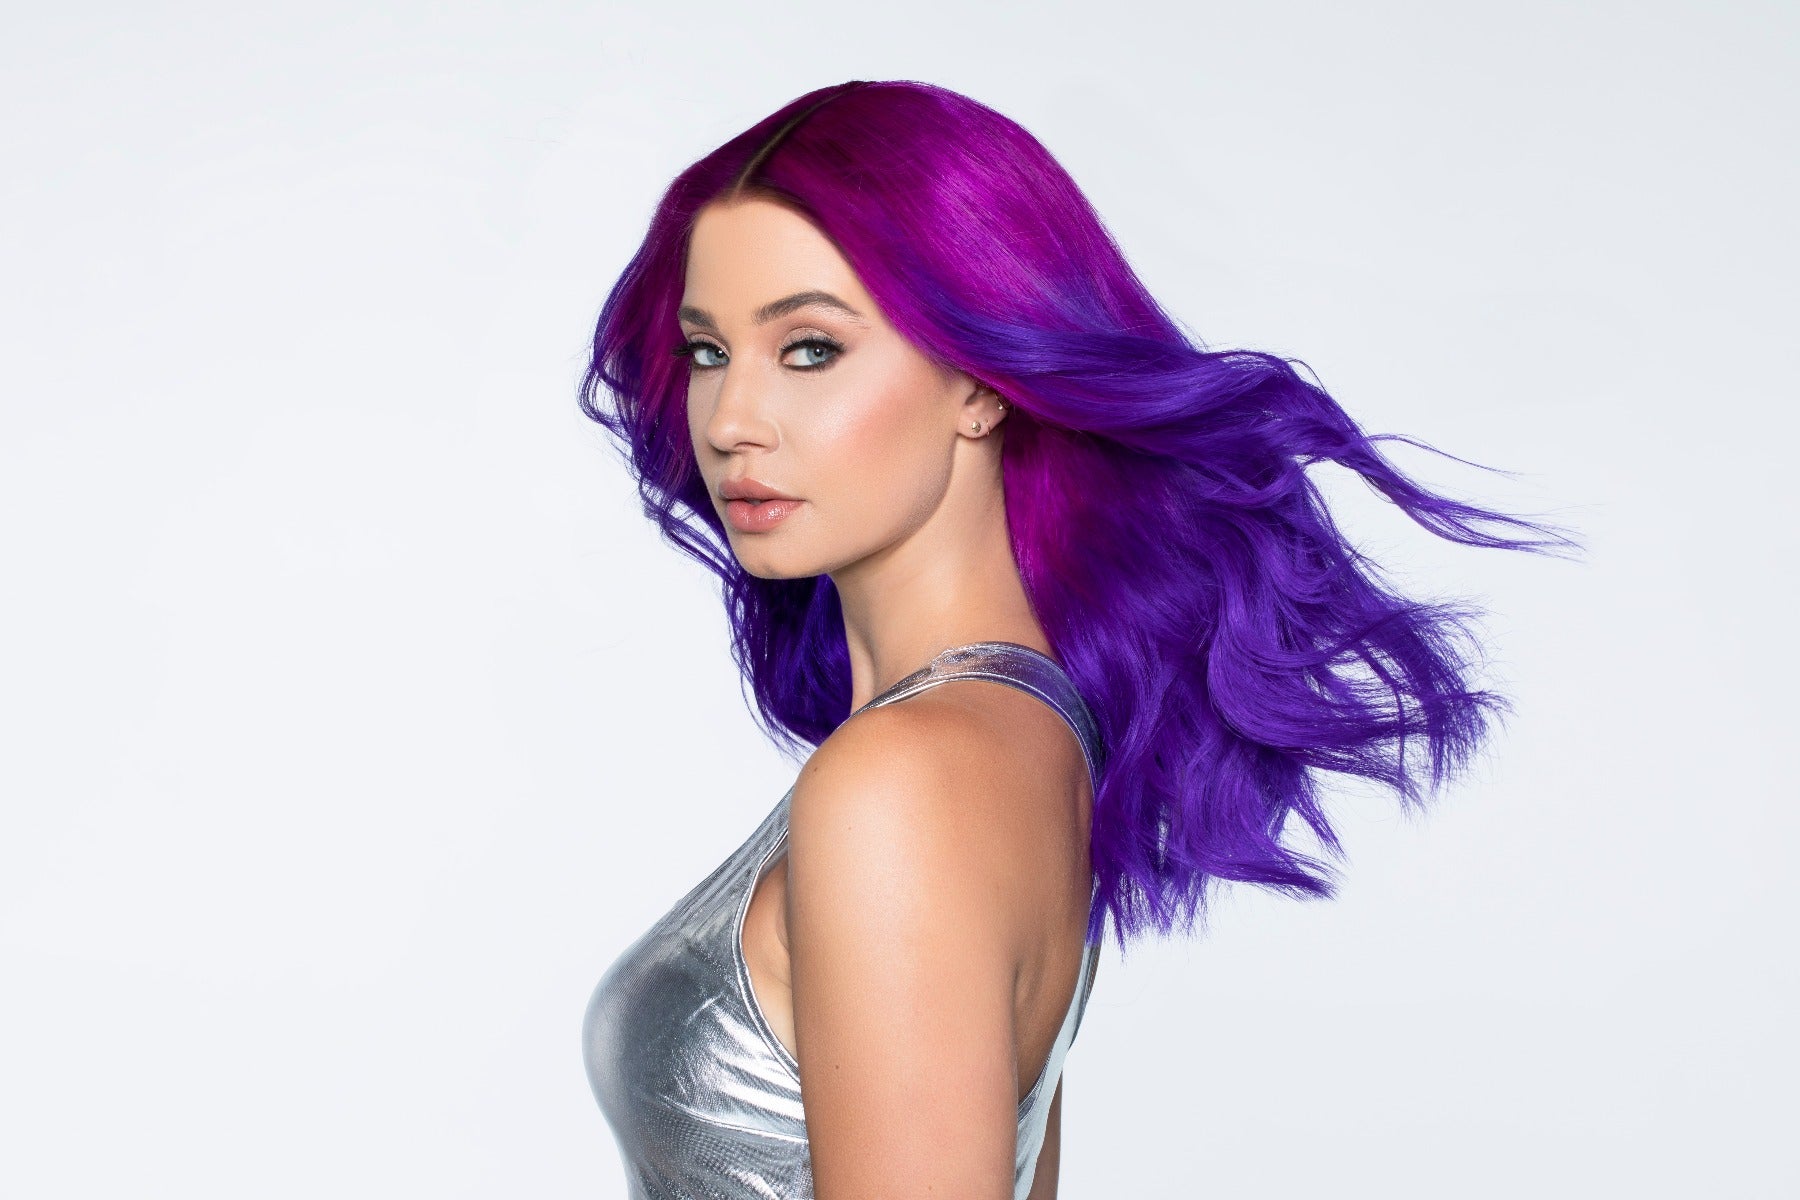 Splat Purple Hair Dye Ombre Rain Complete Kit with Bleach Semi-Permanent Hair Color